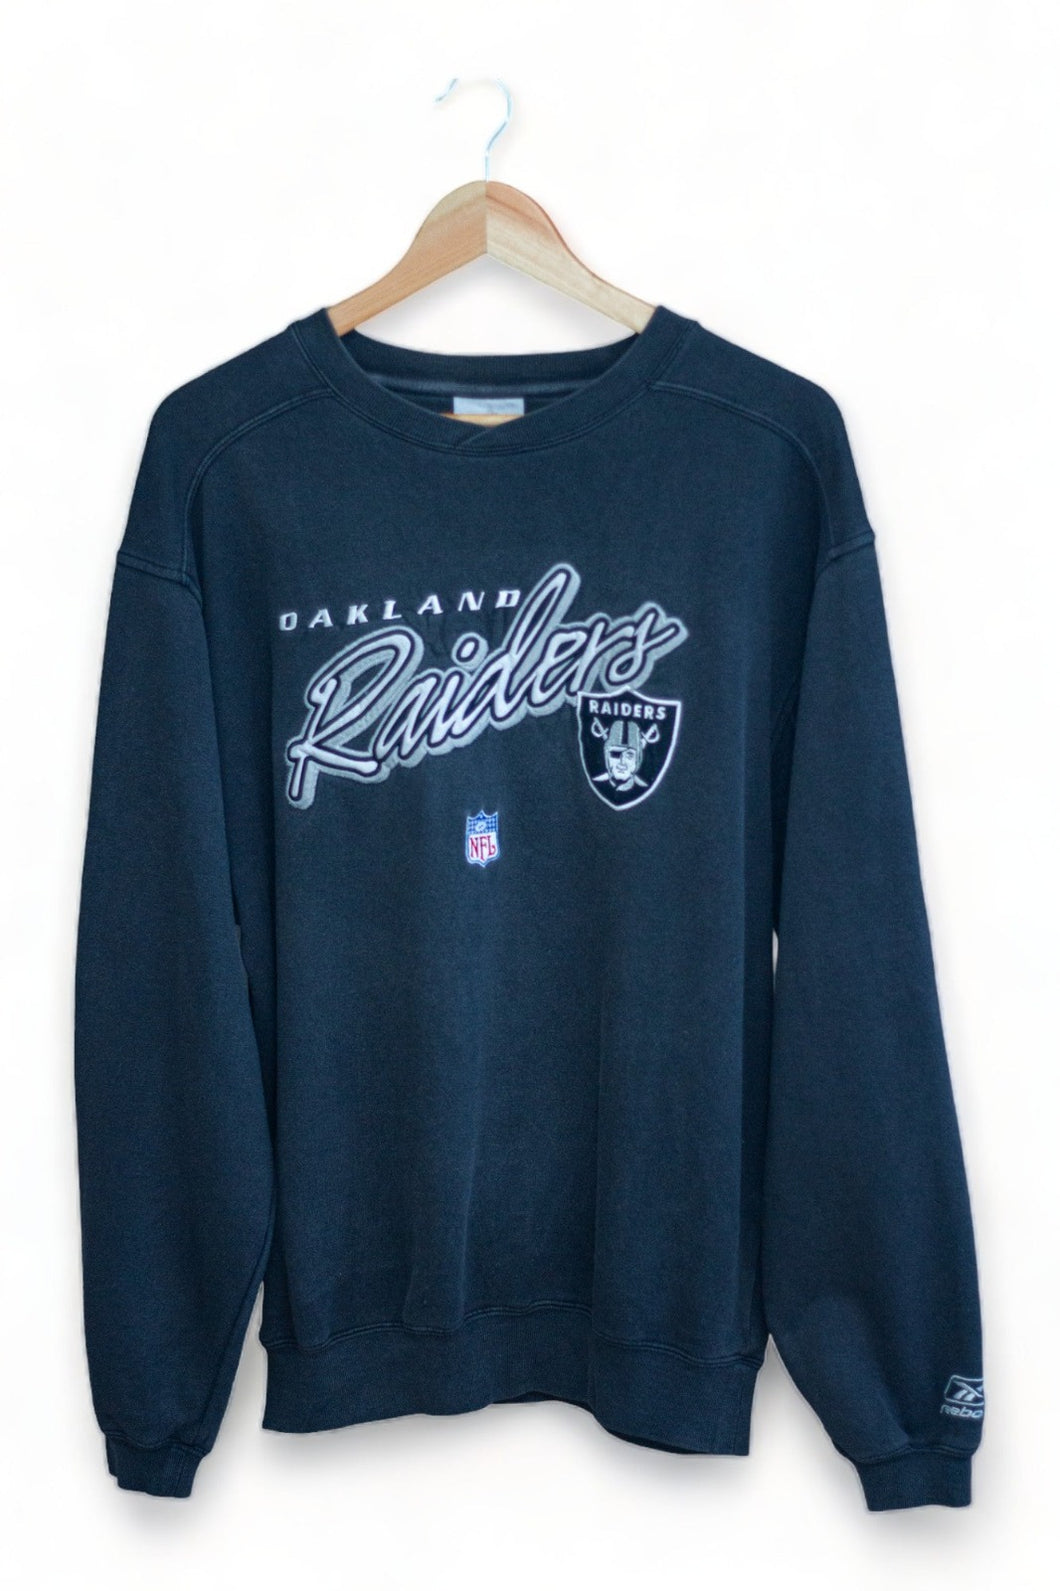 Oakland Raiders - Embroidered Reebok Sweater (M)